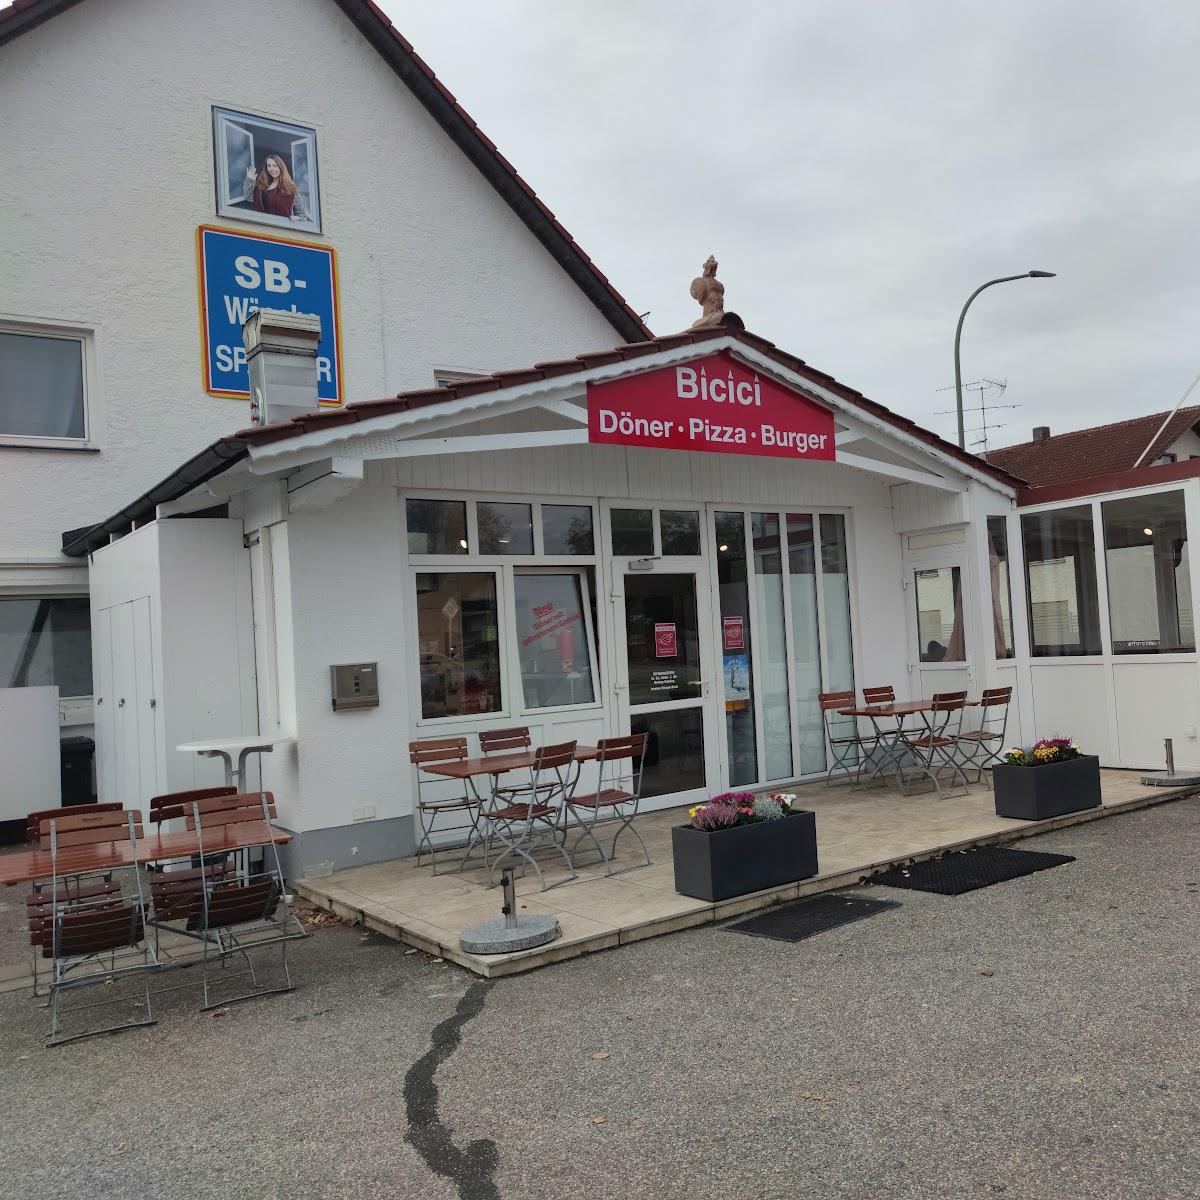 Restaurant "Bicici Grill" in Essenbach